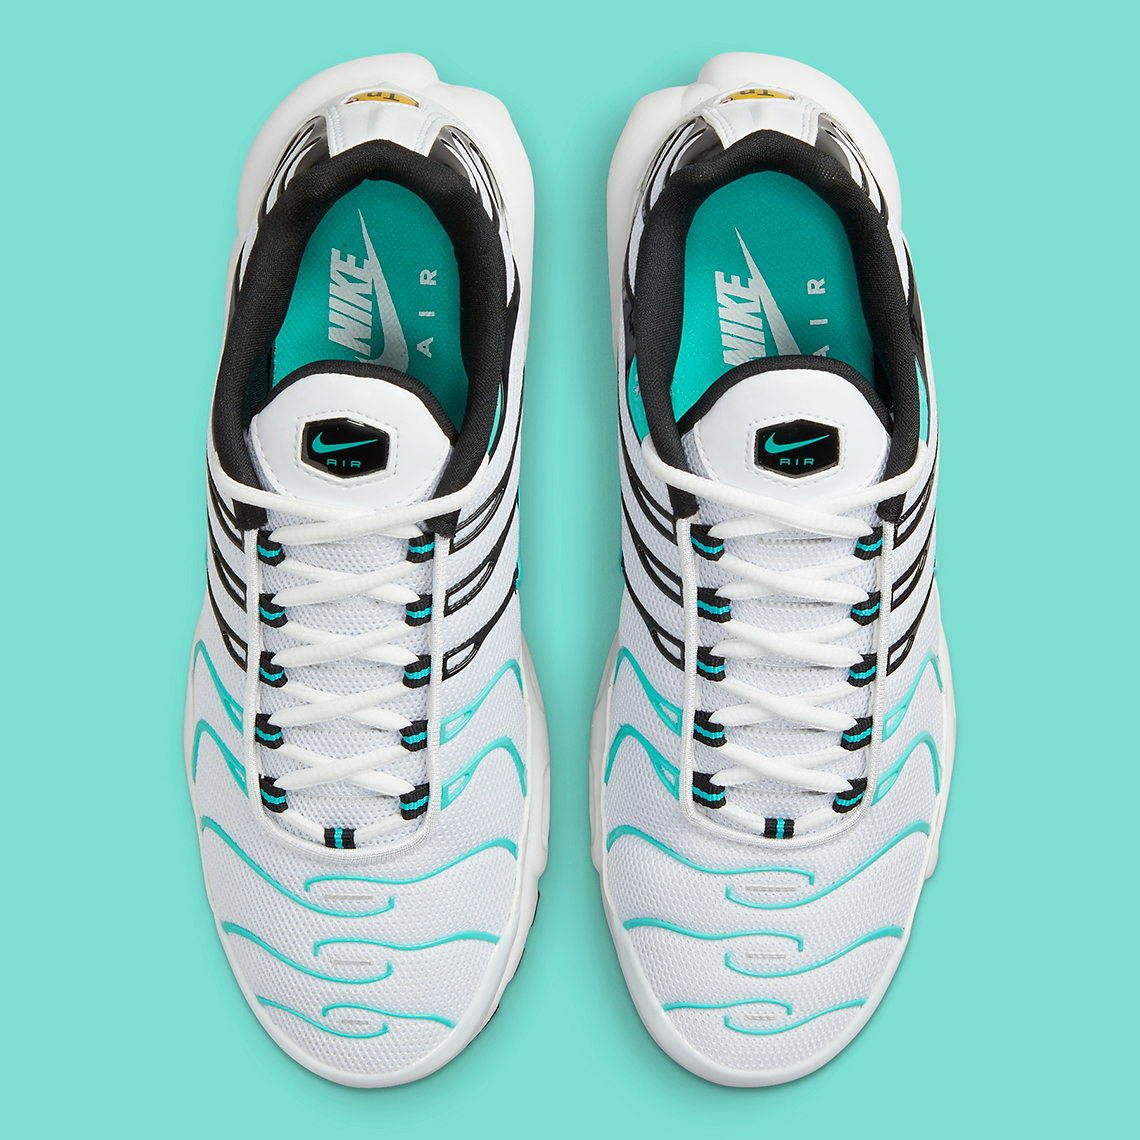 atmos Nike Air Max Plus 604133-148 Release Date | SneakerNews.com